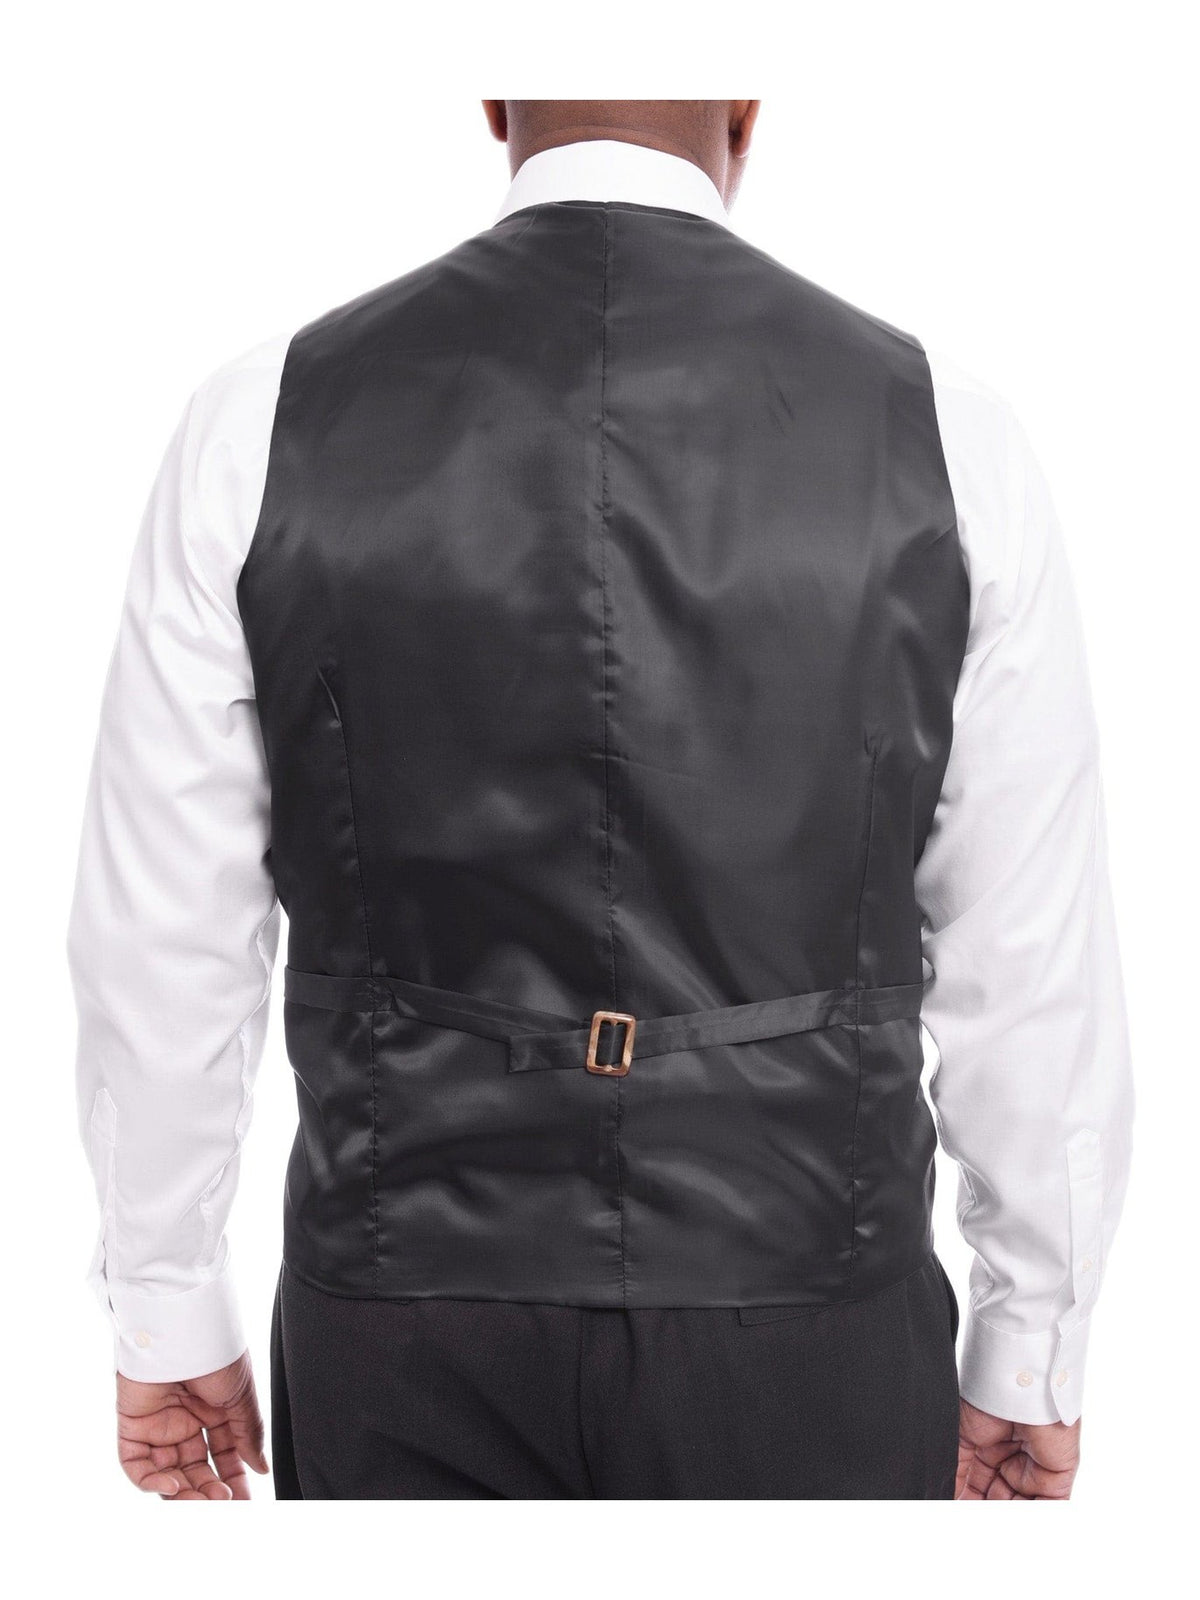 Steven Land TWO PIECE SUITS Steven Land Solid Dark Brown Vested One Button Wool Suit Peak Lapels